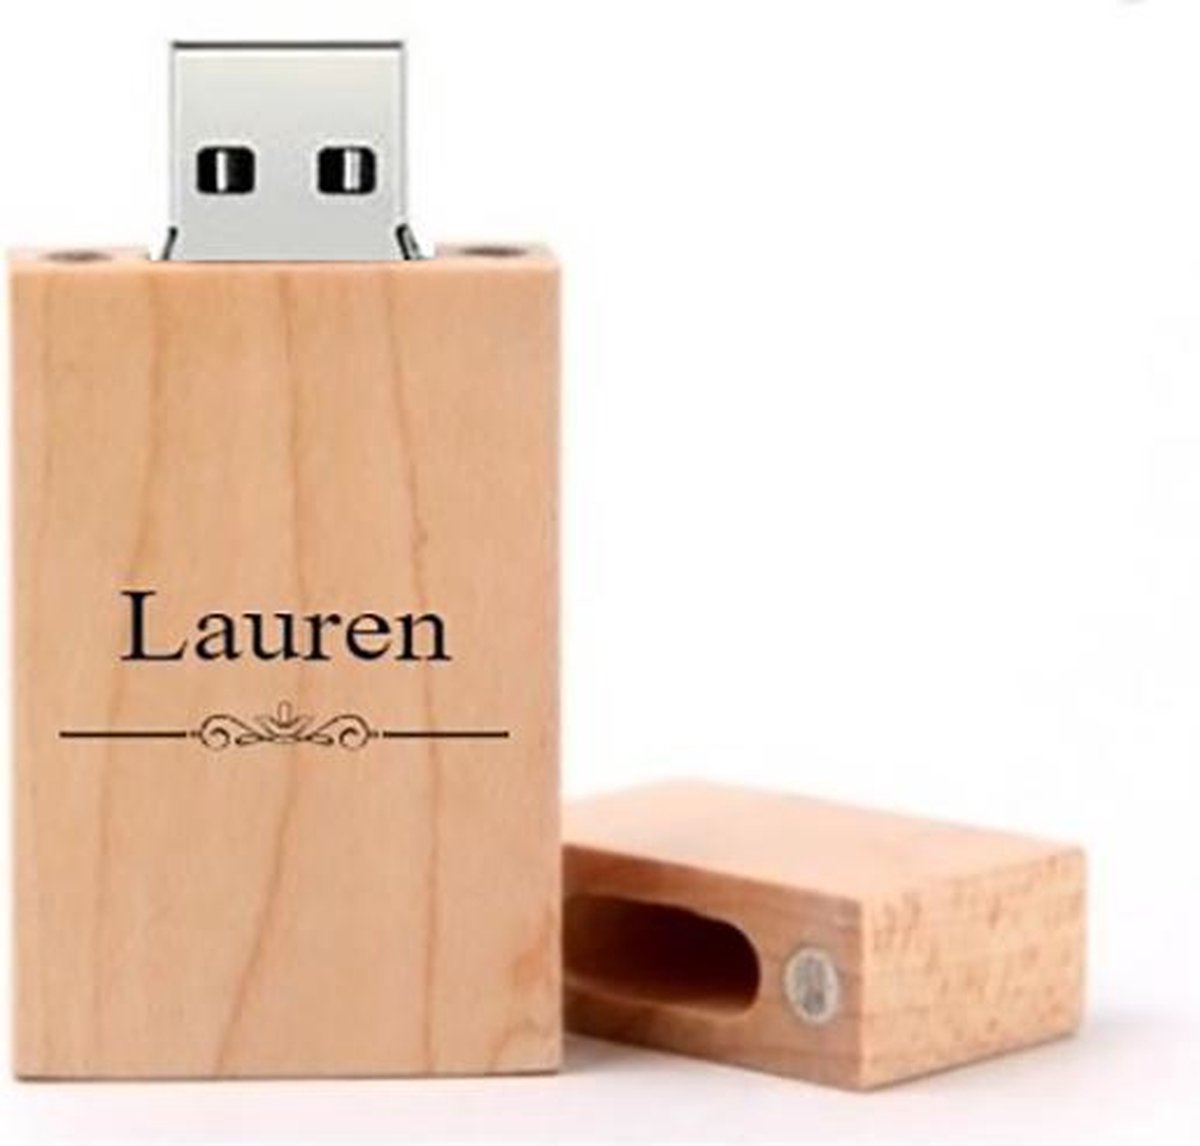 Lauren naam kado verjaardagscadeau cadeau usb stick 32GB